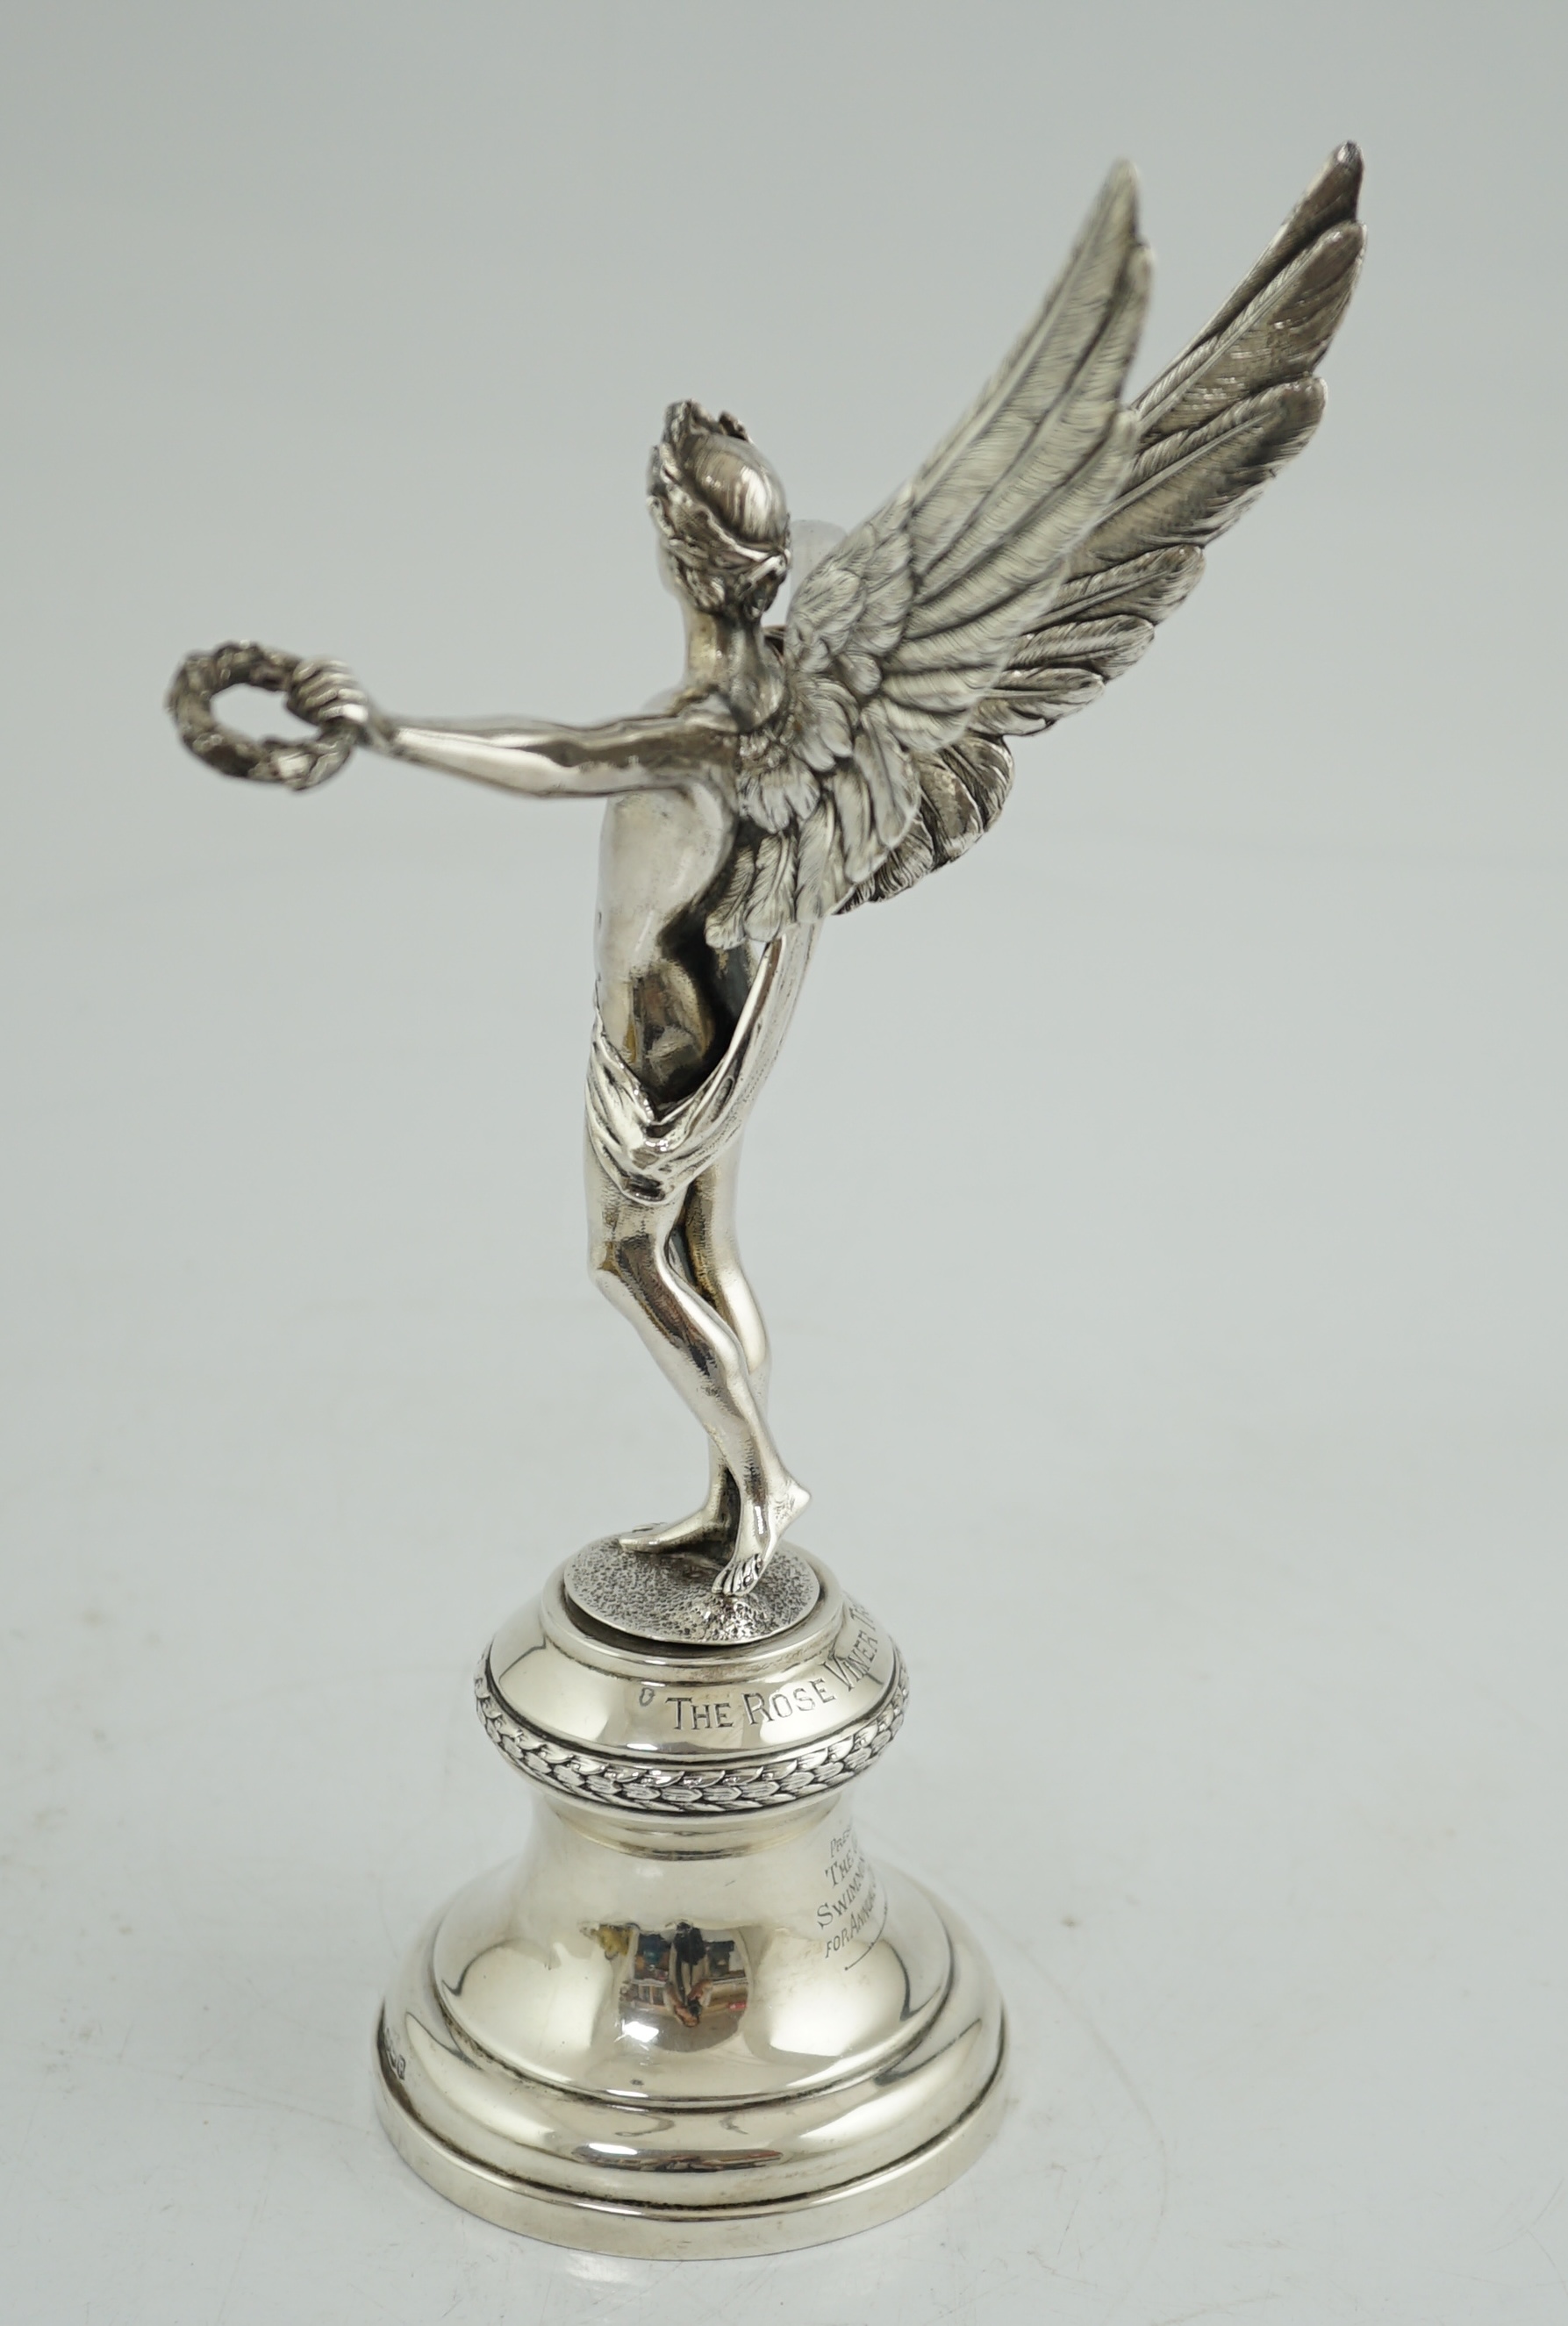 A George V silver presentation swimming trophy, 'The Rose Viner Trophy', by Viners Ltd